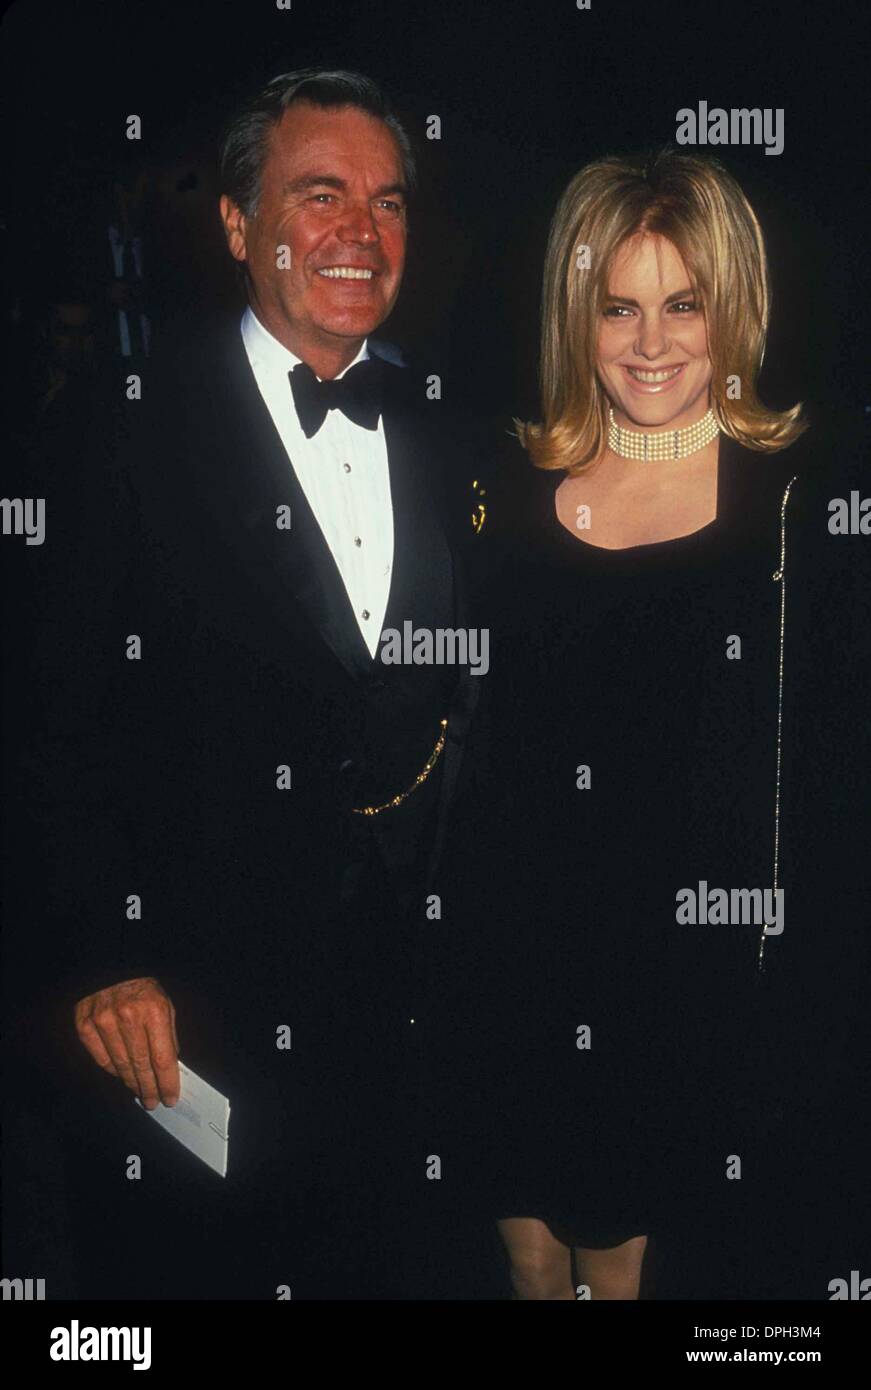 2. August 2006 - Hollywood, Kalifornien, US - ROBERT WAGNER mit KATIE WAGNER 1991. # 16135. (Kredit-Bild: © Phil Roach/Globe Photos/ZUMAPRESS.com) Stockfoto